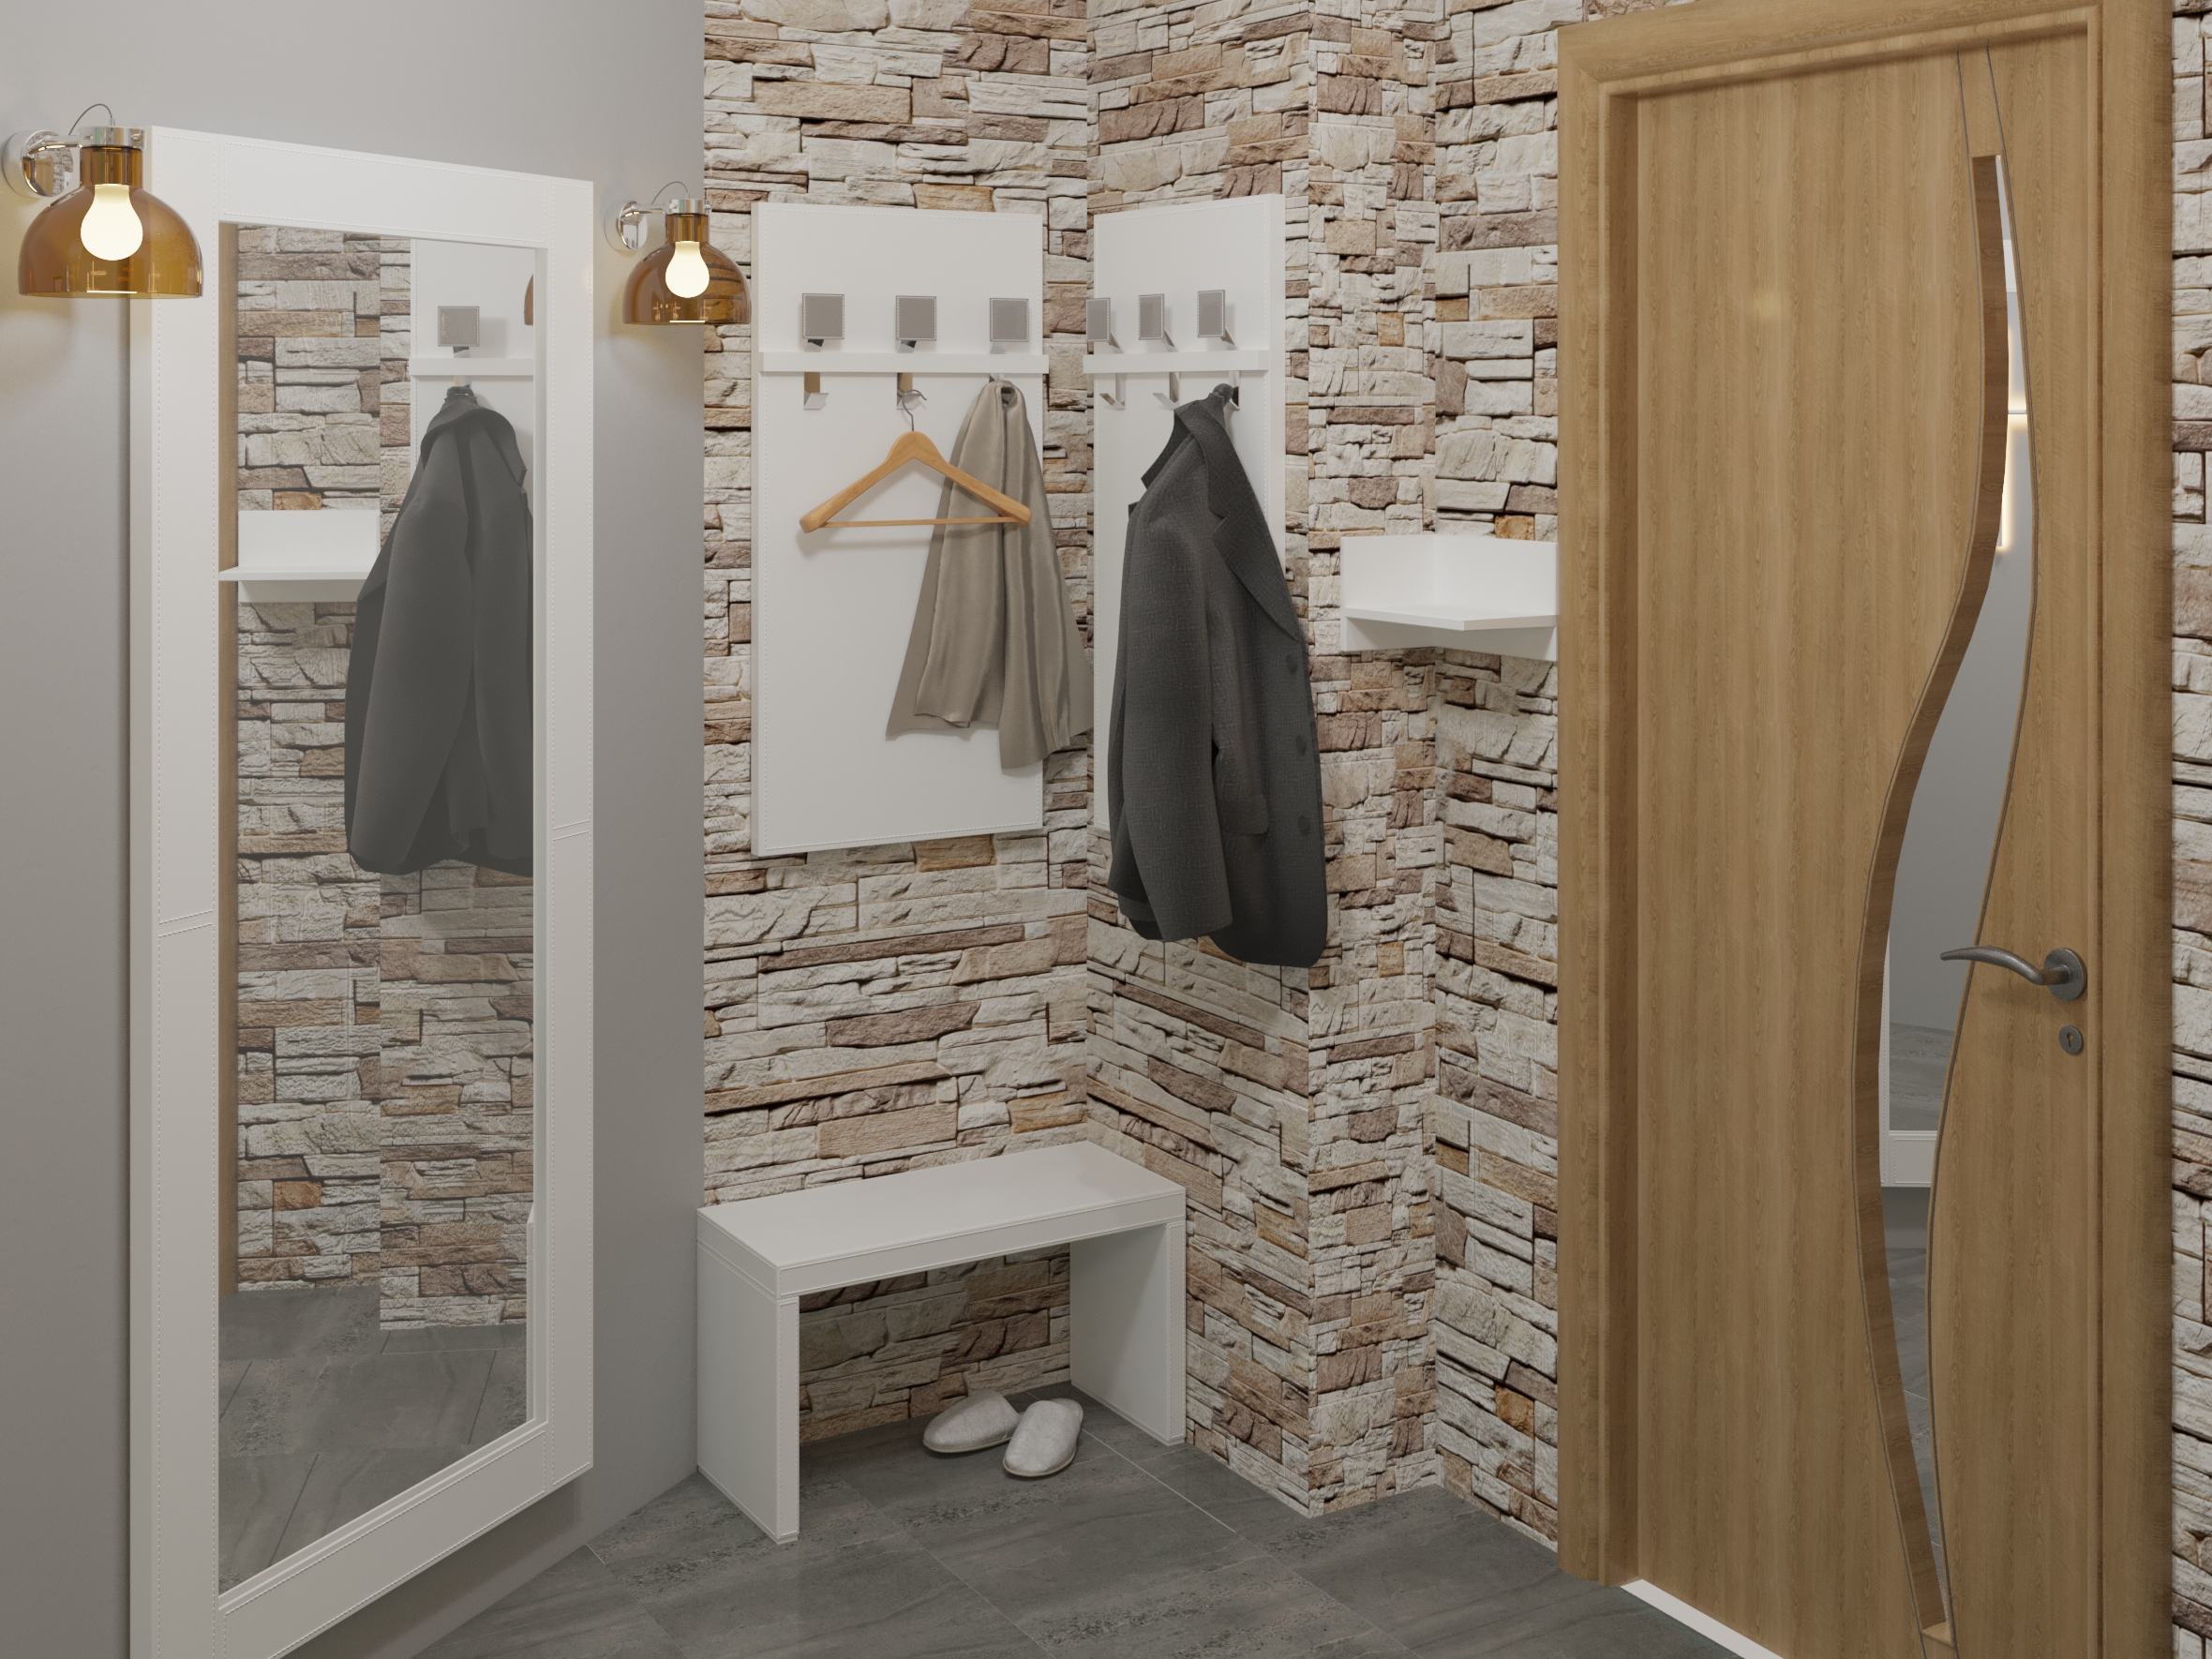 Studio apartment in 3d max corona render image